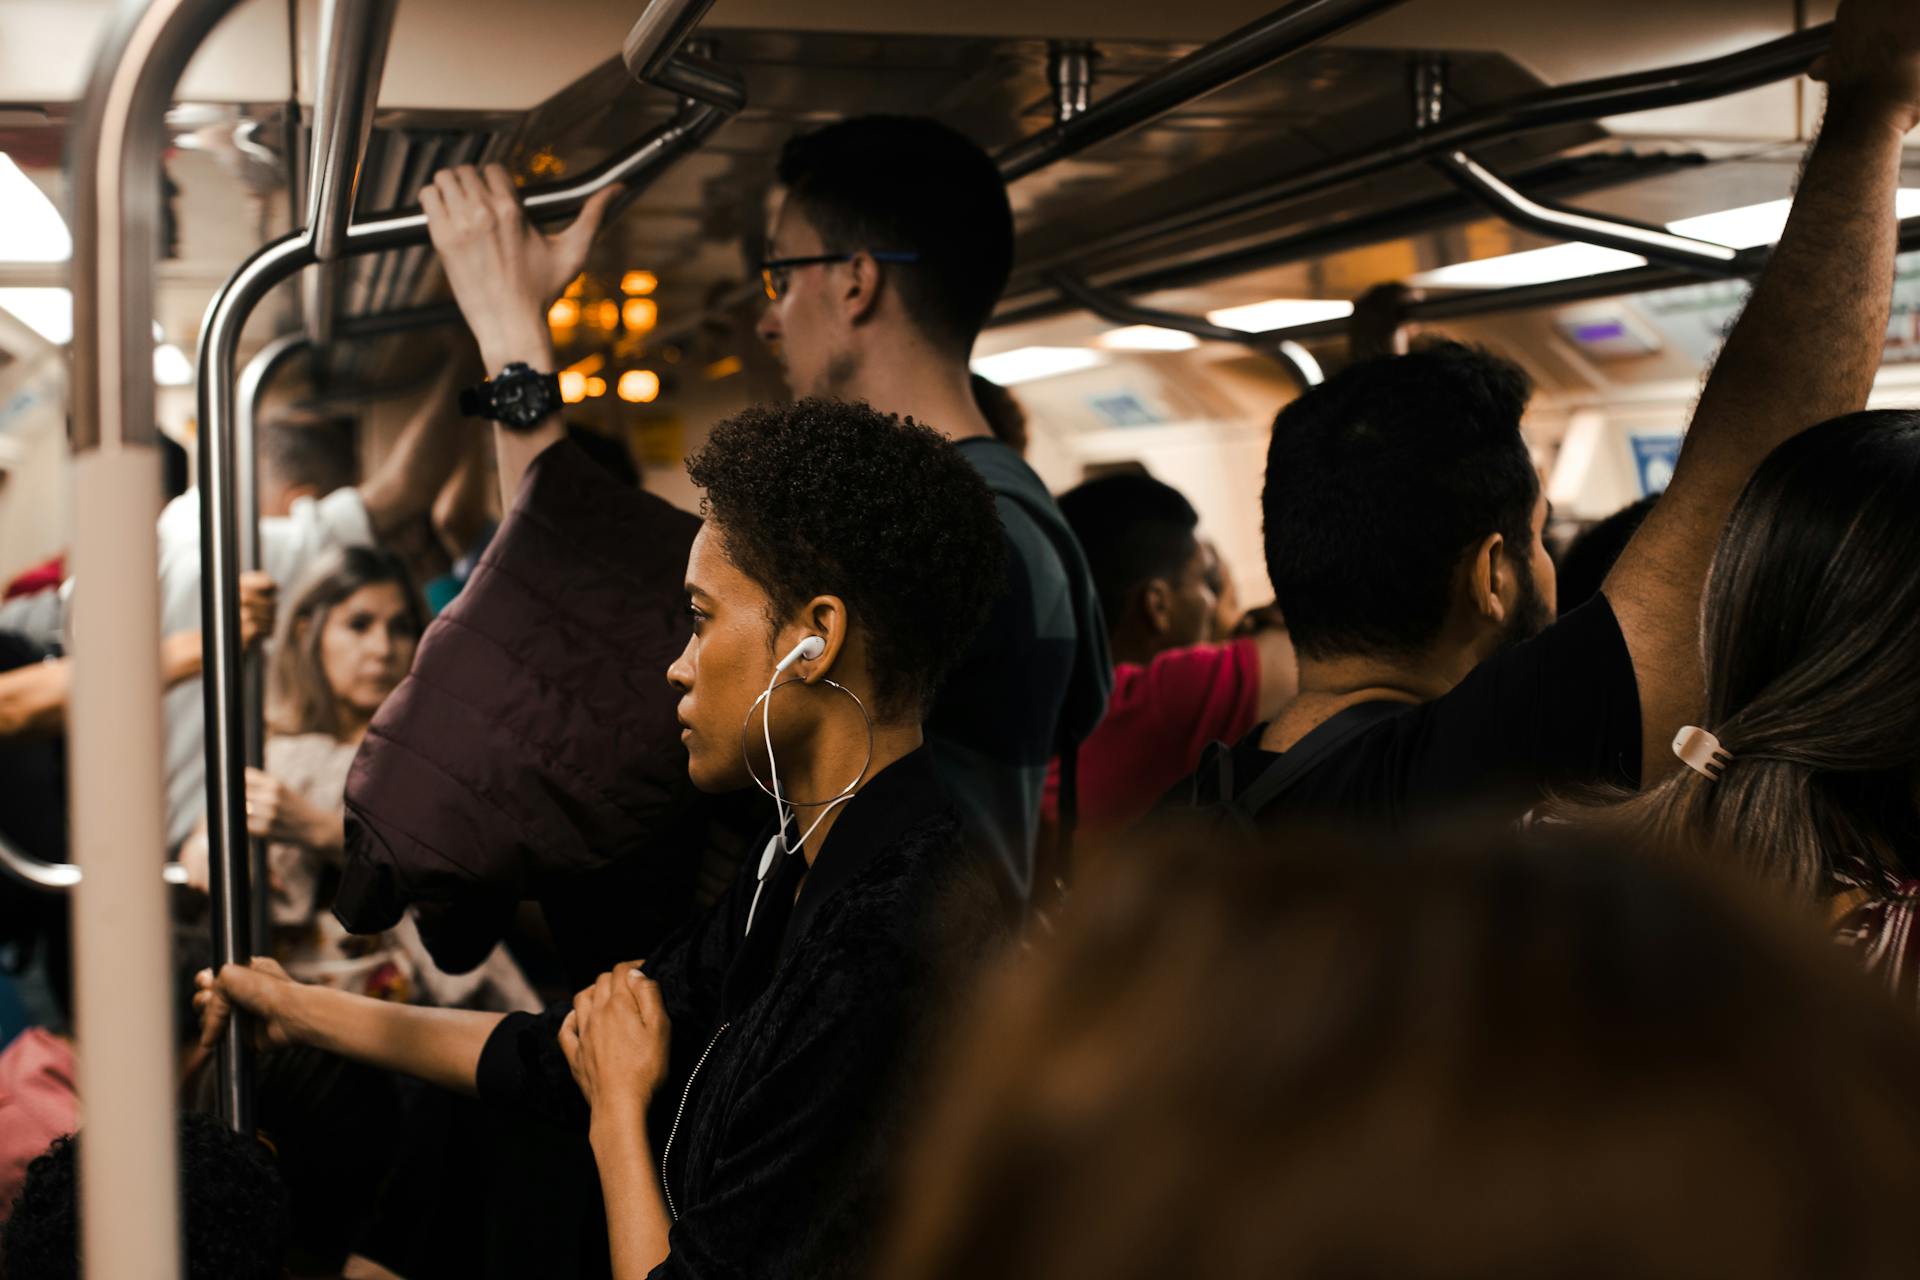 A crowded subway train | Source: Pexels